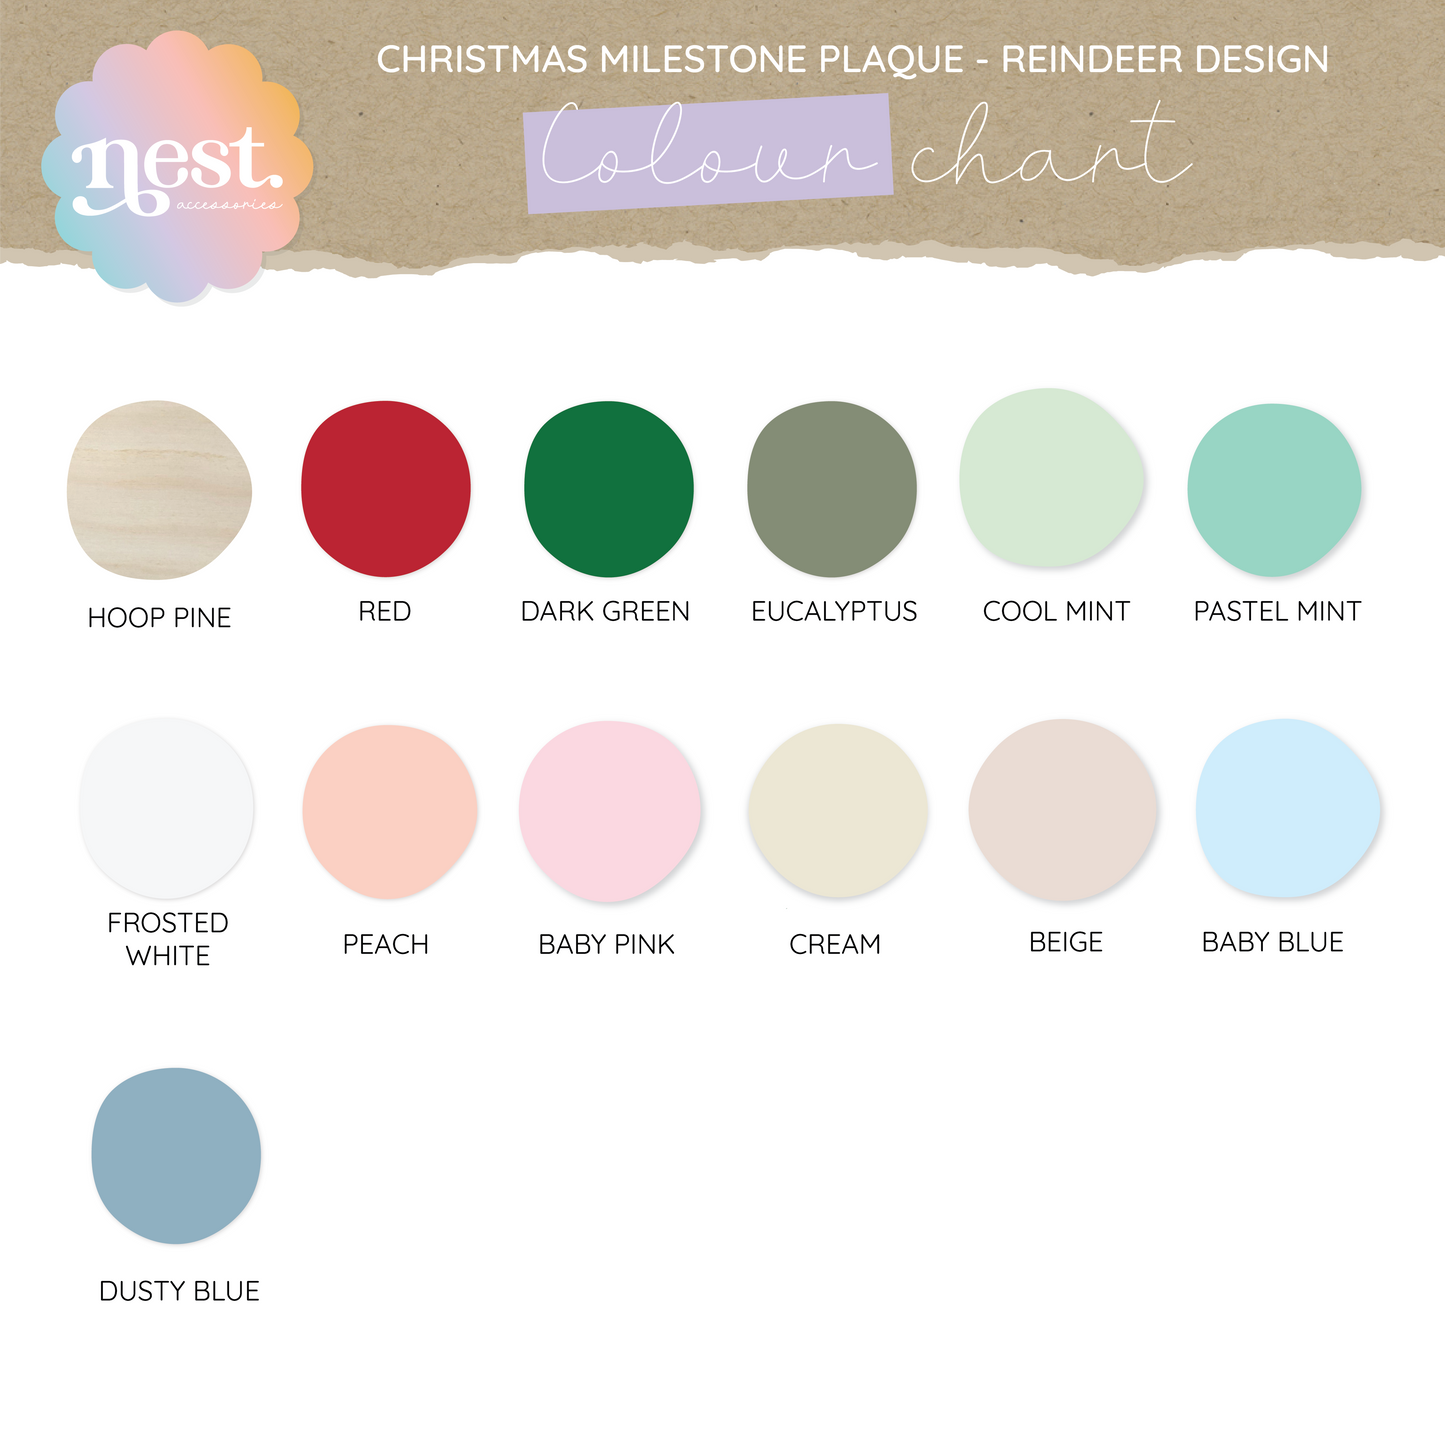 My First Christmas Milestone Plaque - Reindeer Design